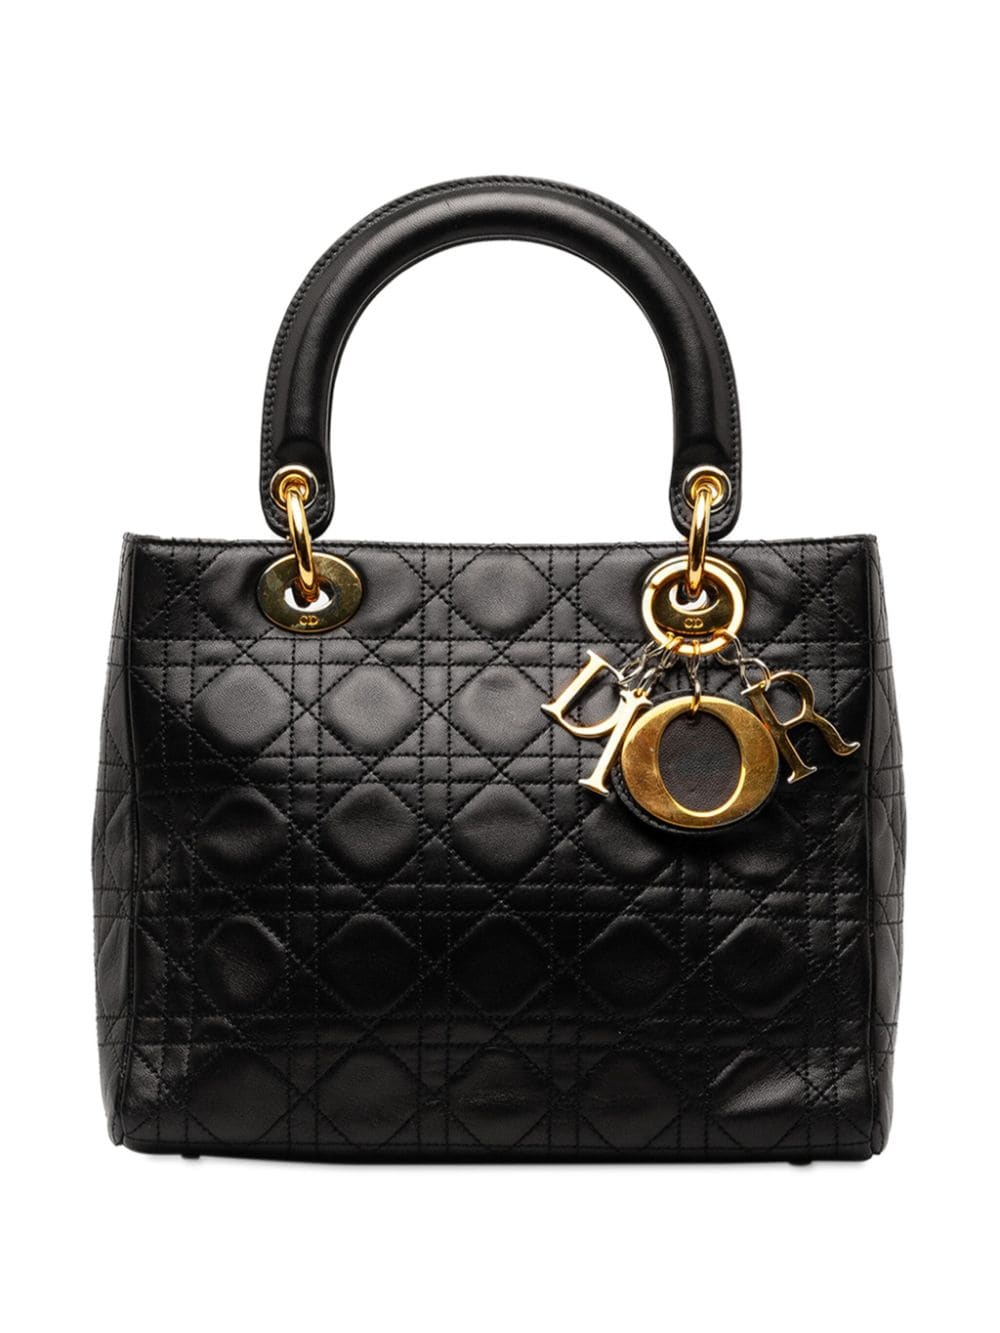 Image 1 of Christian Dior Pre-Owned 1997 medium Cannage Lady Dior two-way handbag